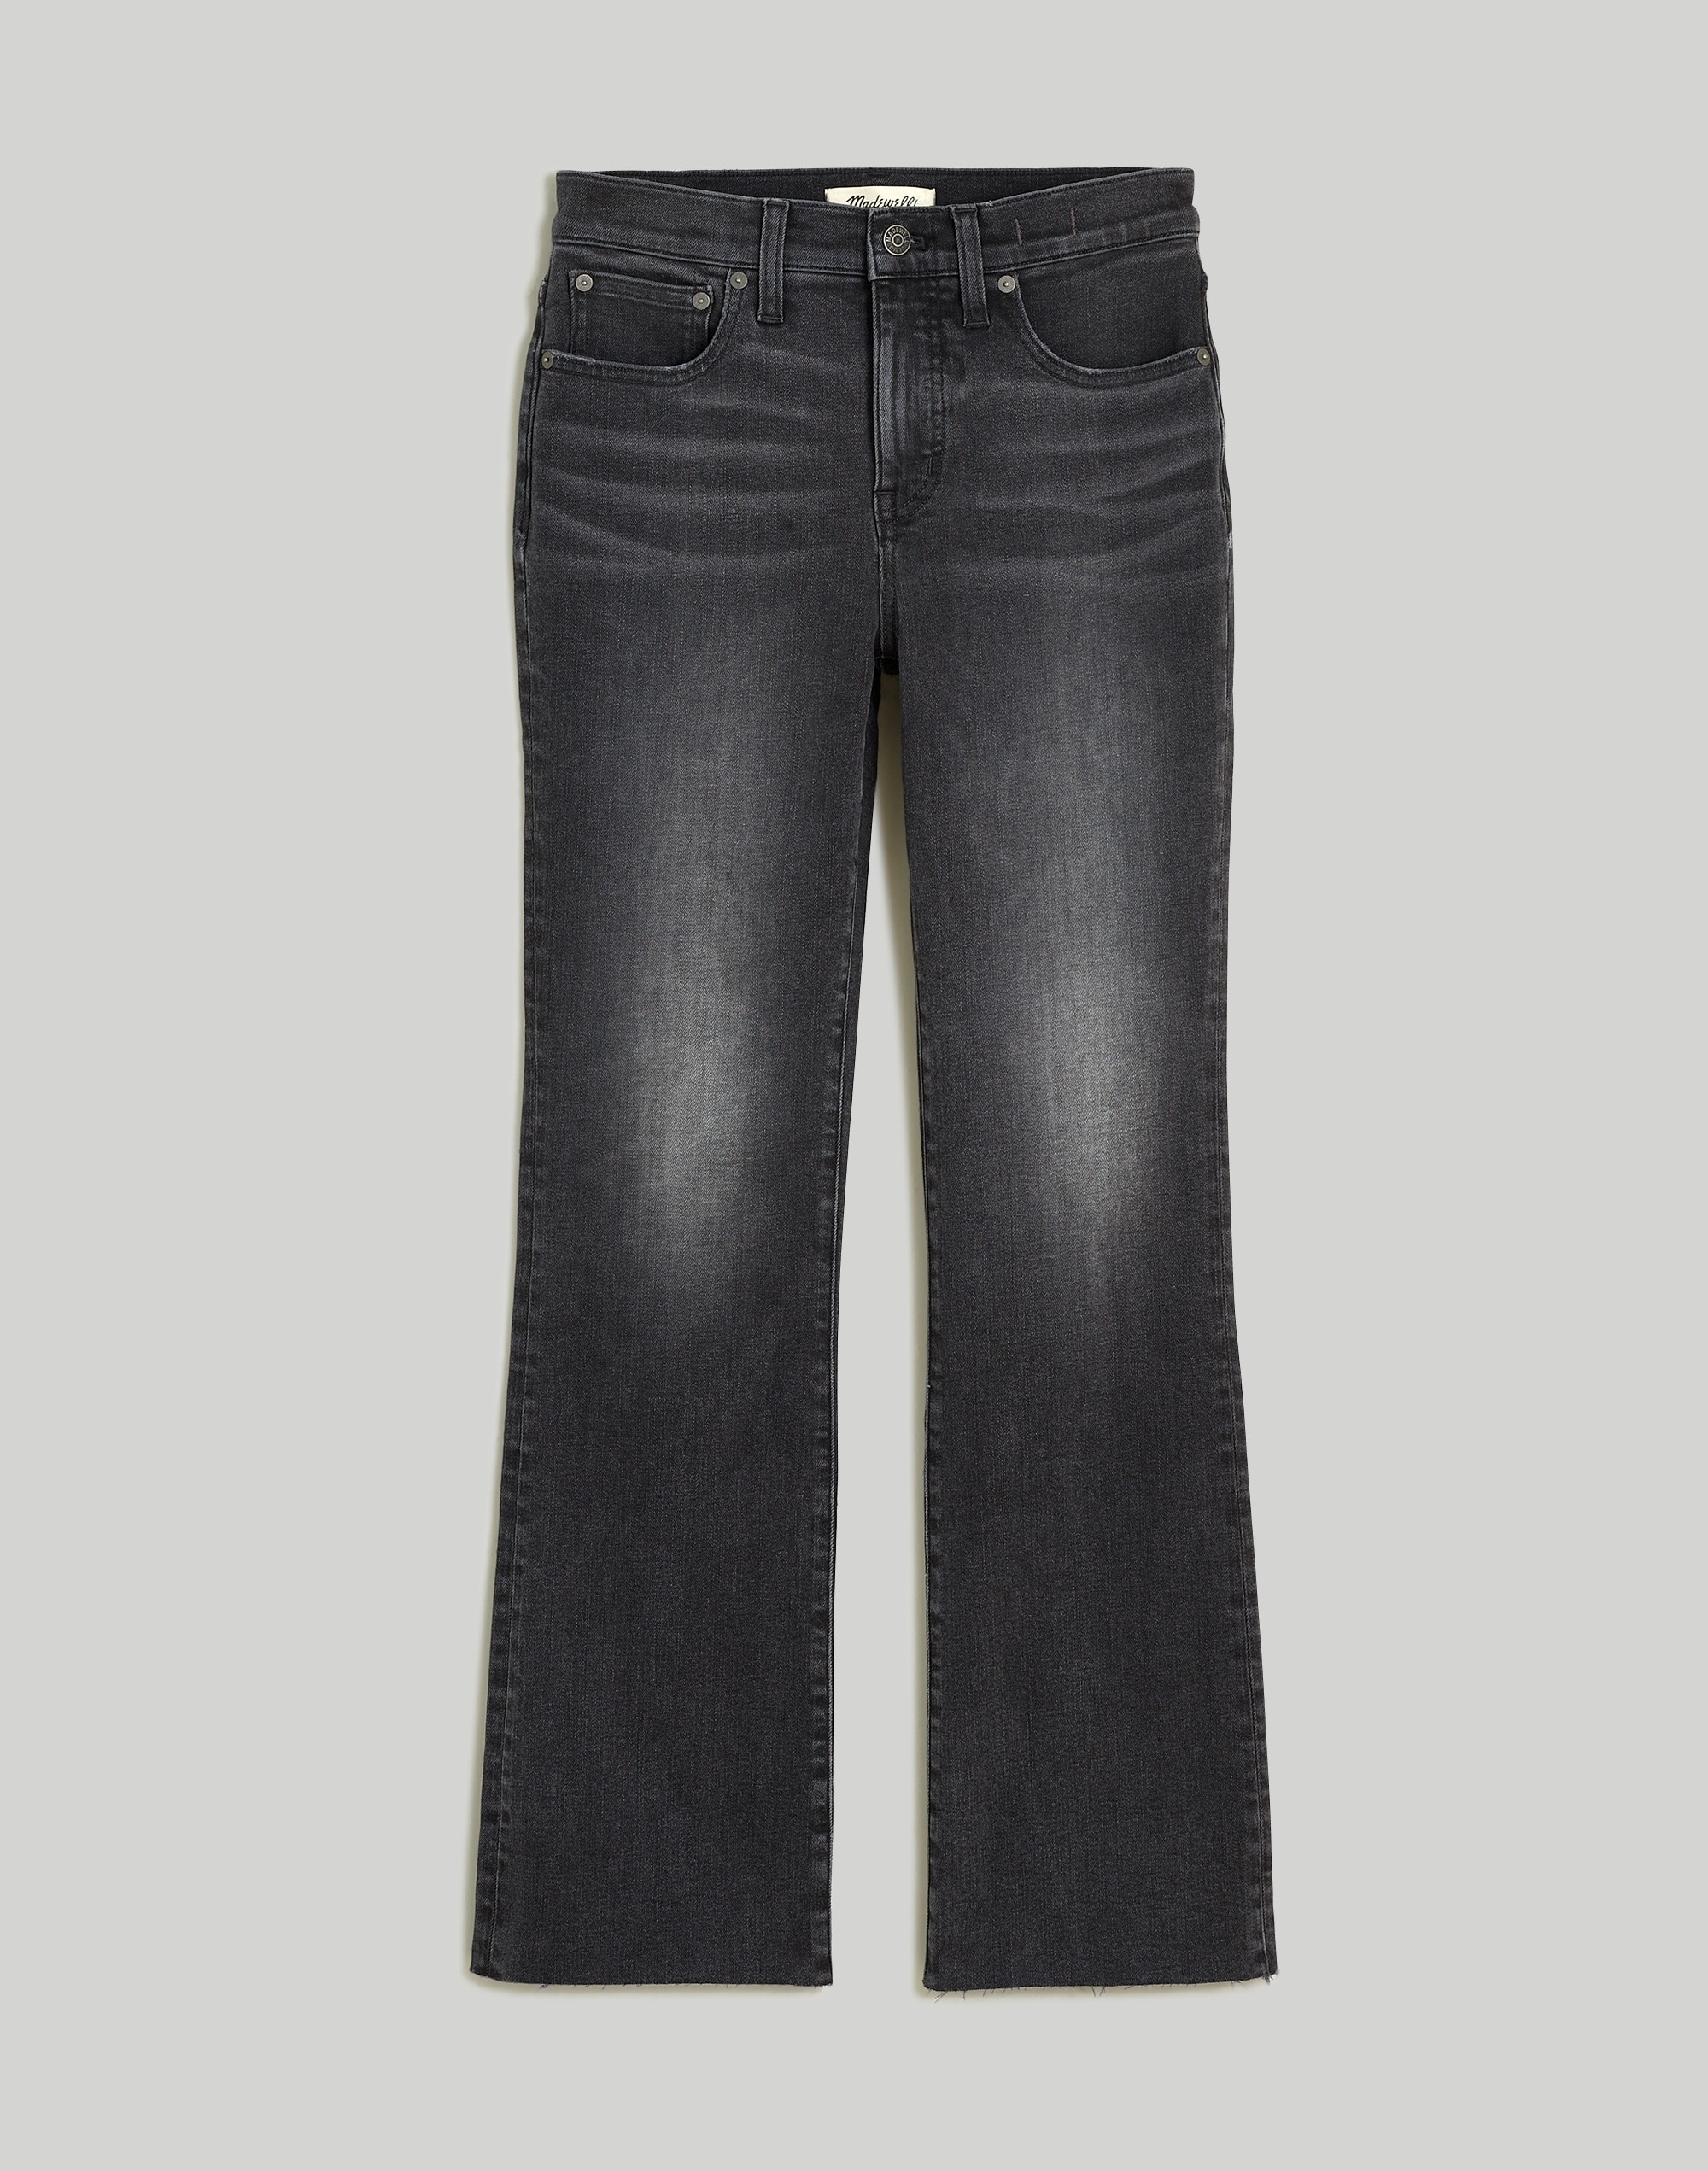 90s Baggy High Jeans - Dark gray - Ladies